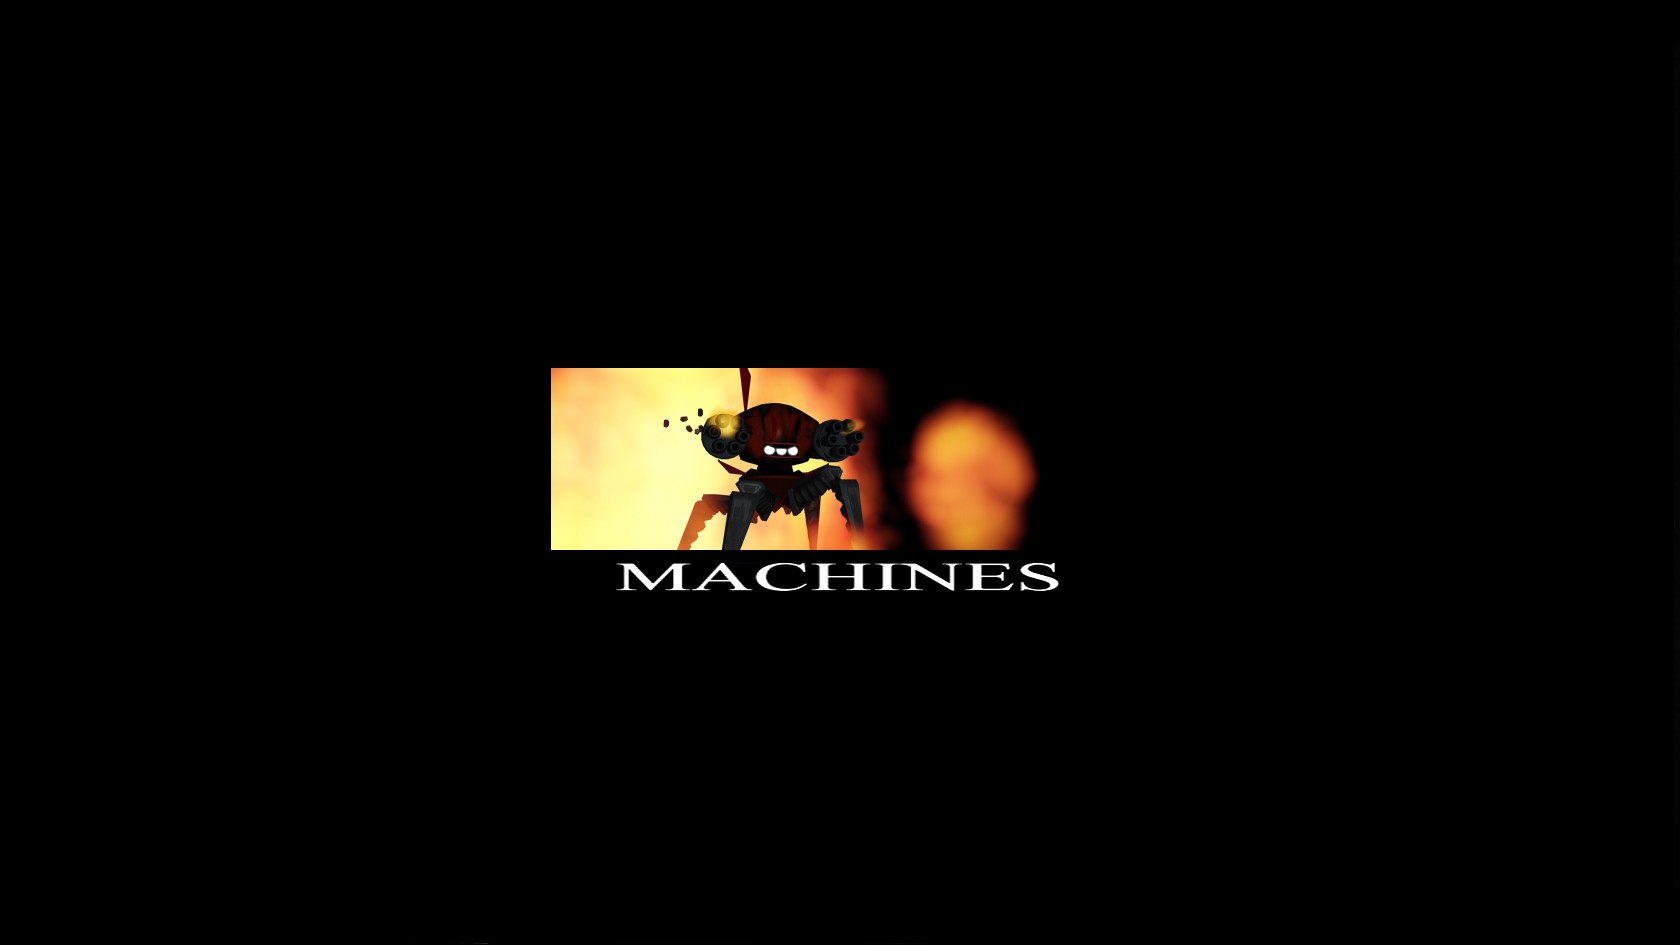 machine, Robot, Video Games, Strategy Games Wallpaper